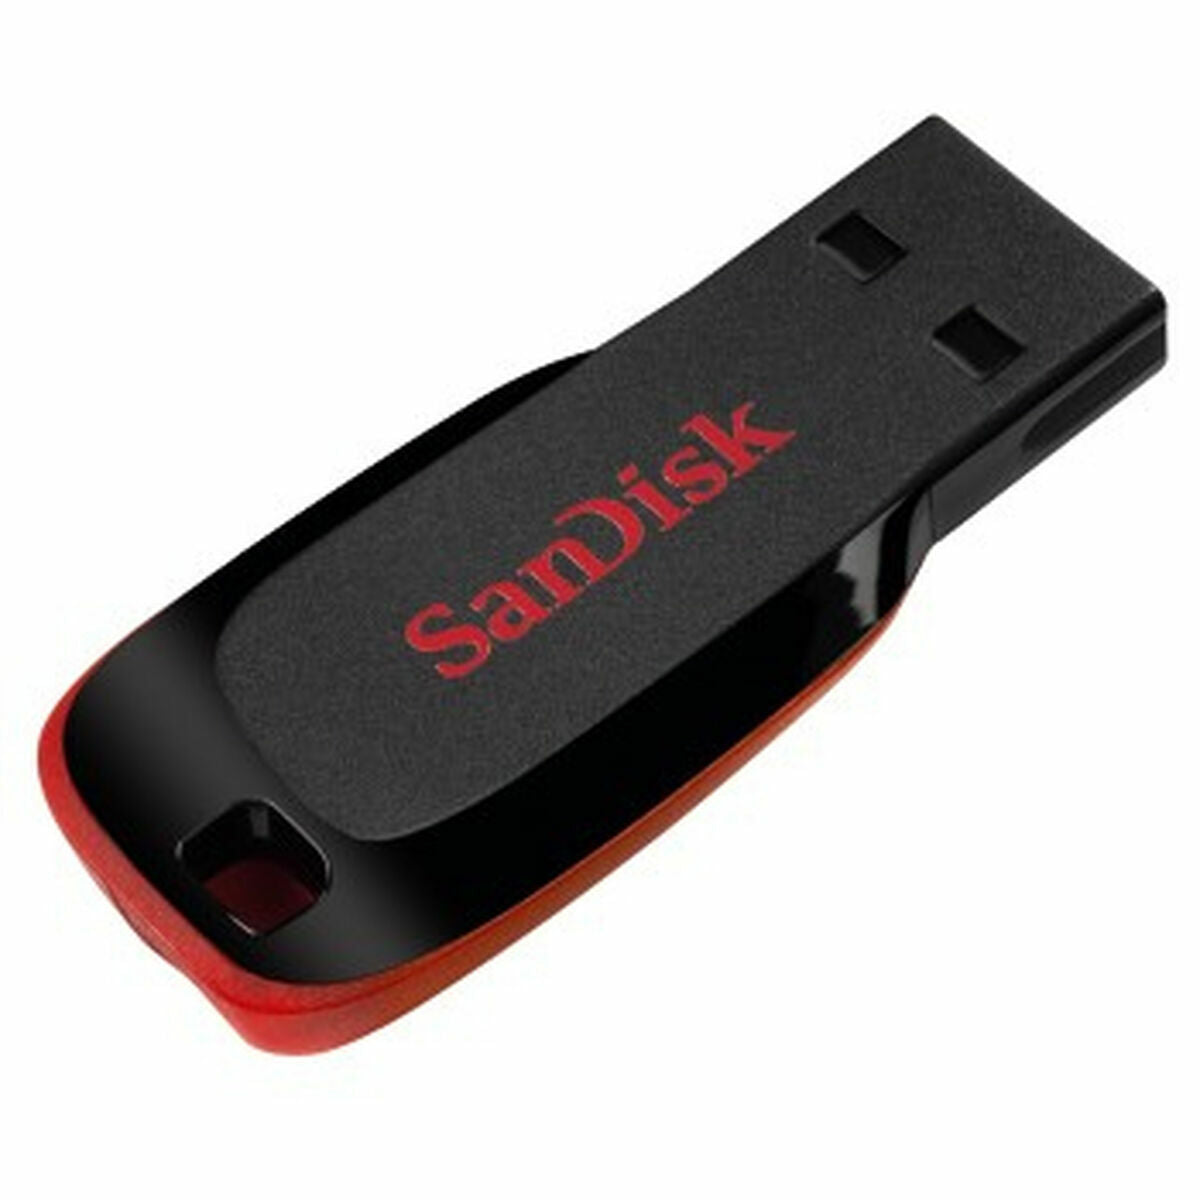 Pendrive SanDisk Cruzer Blade Noir 64 GB